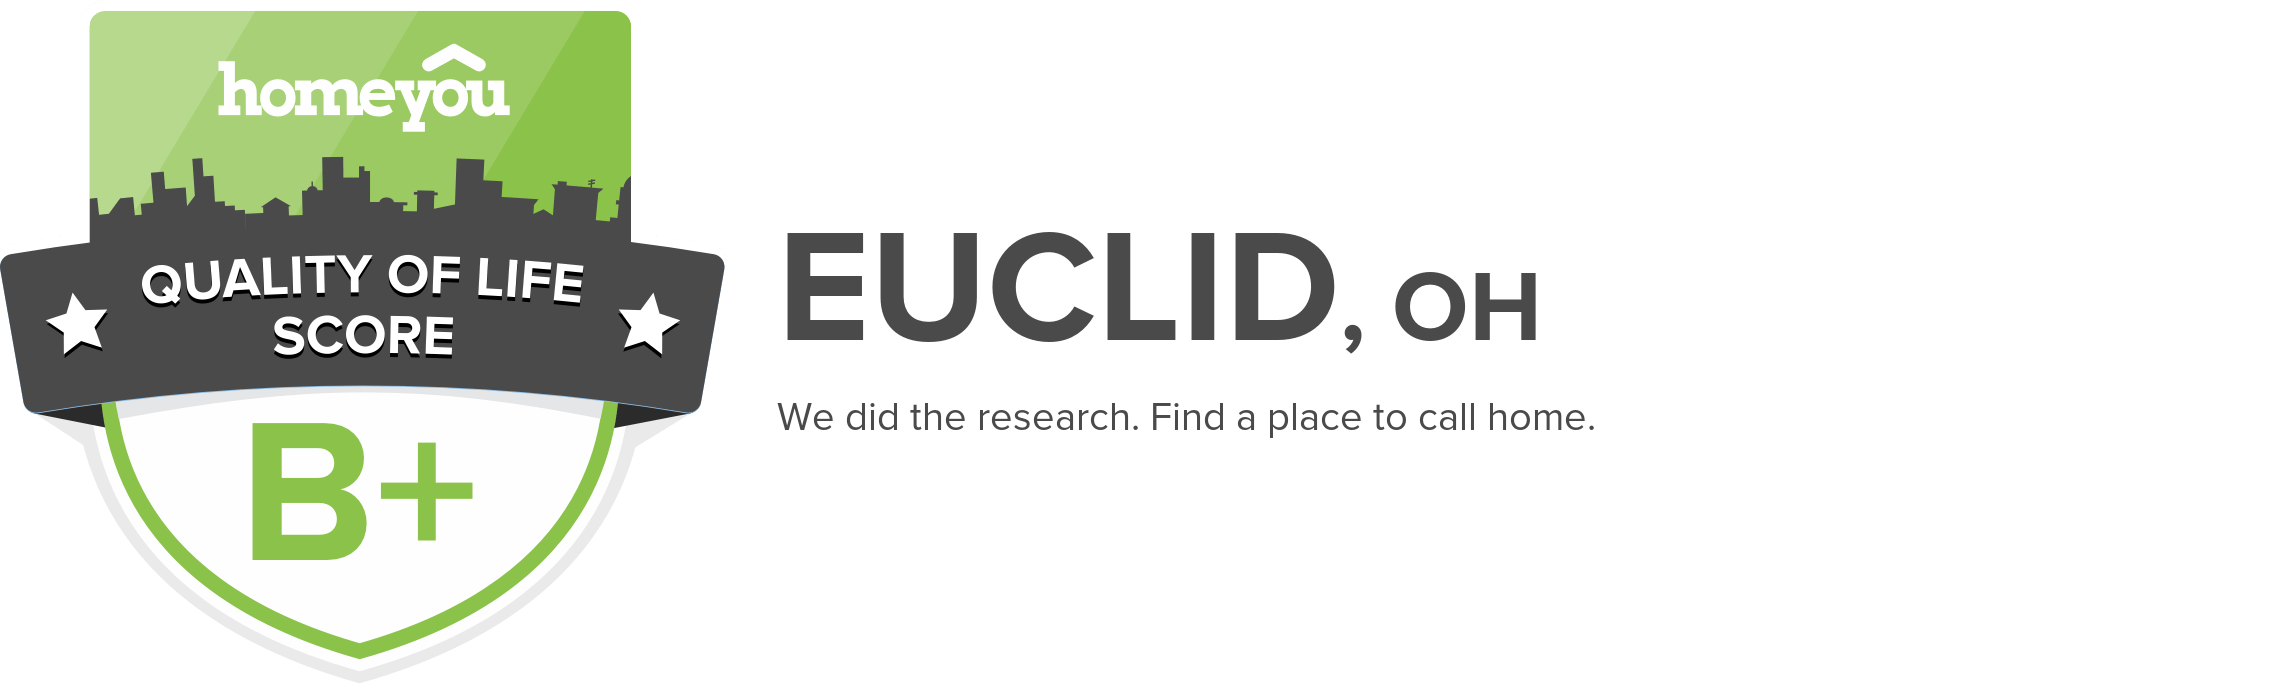 Euclid, OH